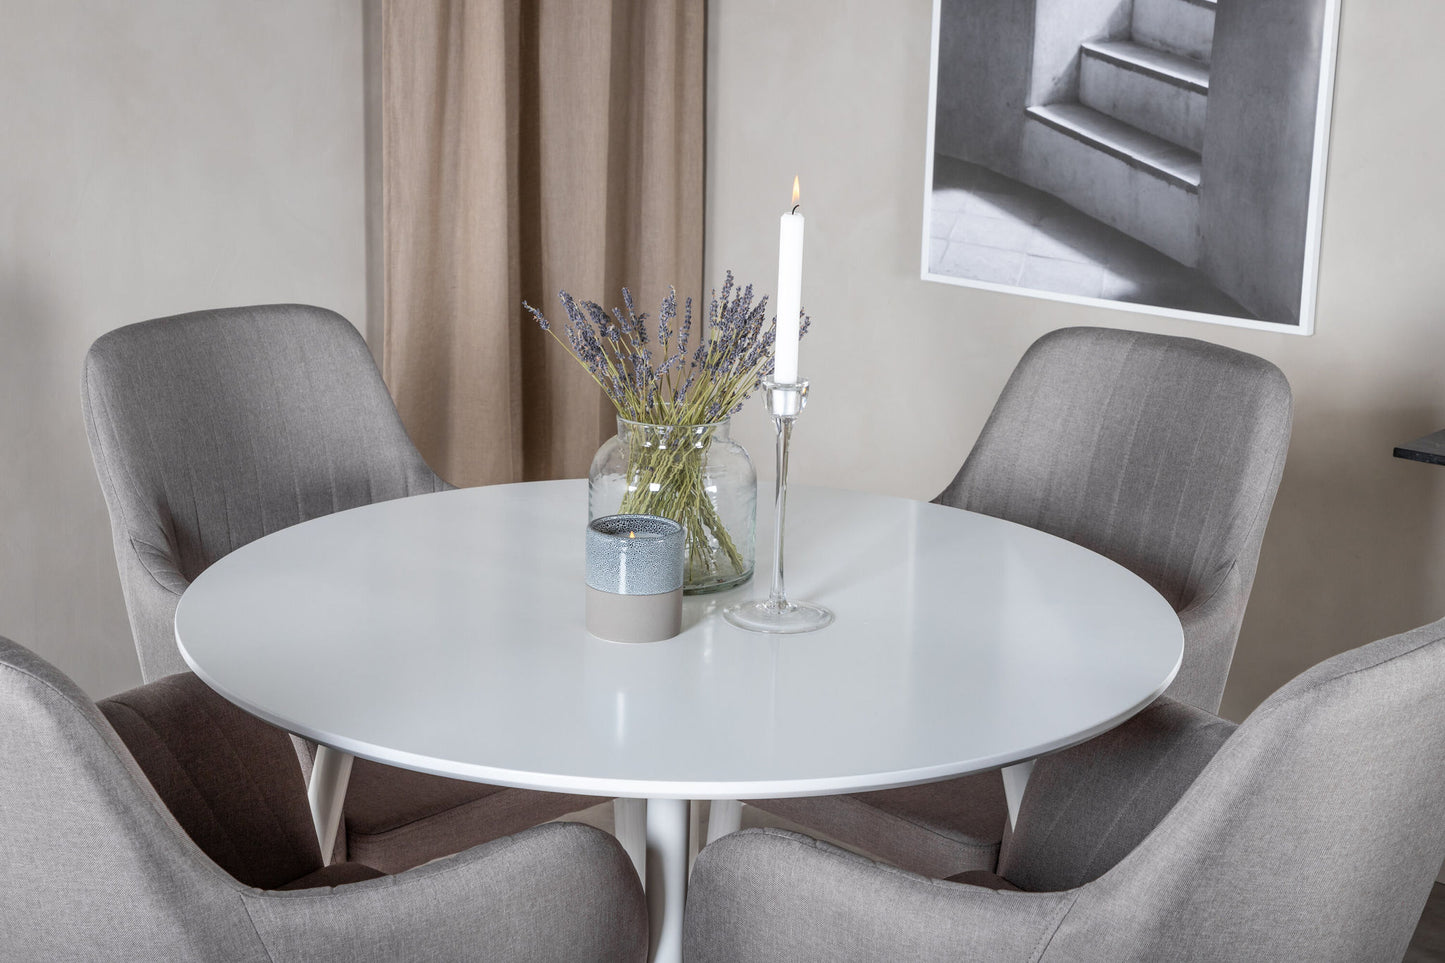 Plaza Round Table 100 cm - Hvide top / hvide ben +komfortstol 2 -pakke polargrå - Hvide ben _4